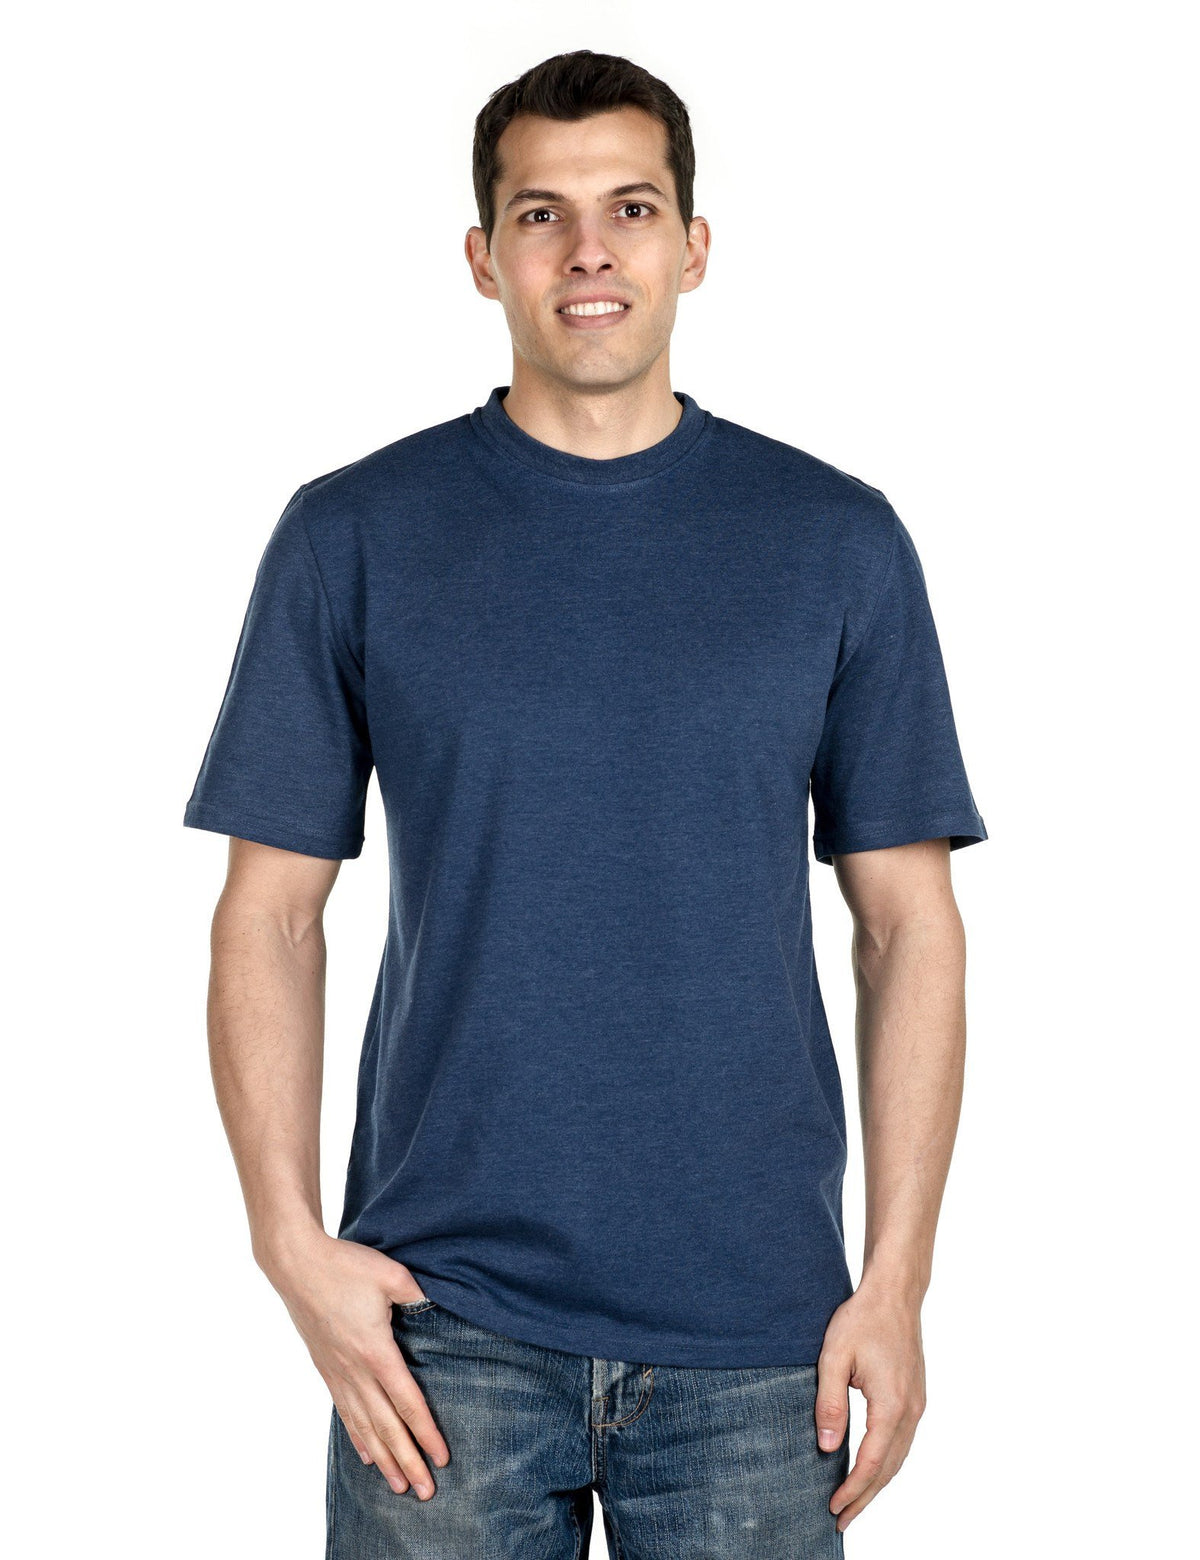 Men's 2-Pack Premium Knit T-Shirts - Black/Navy